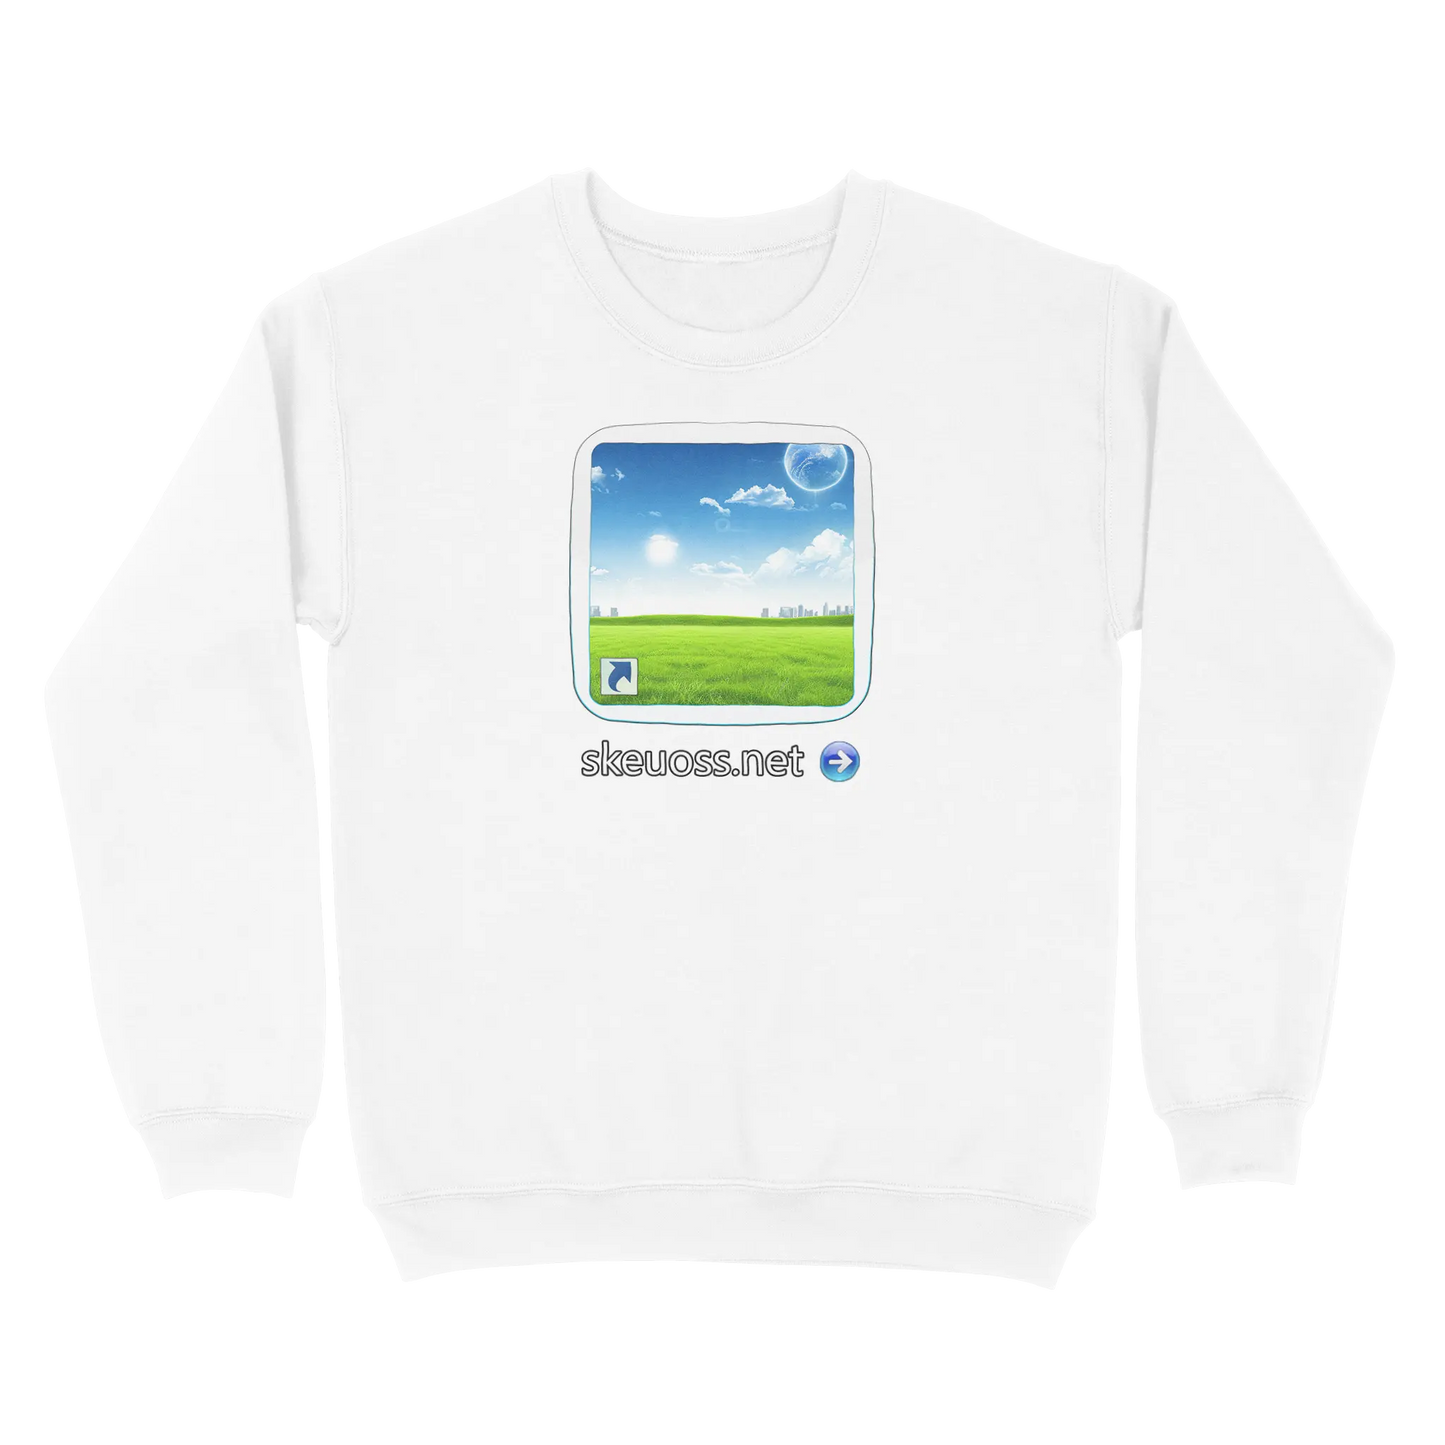 Frutiger Aero Sweatshirt - User Login Collection - User 311